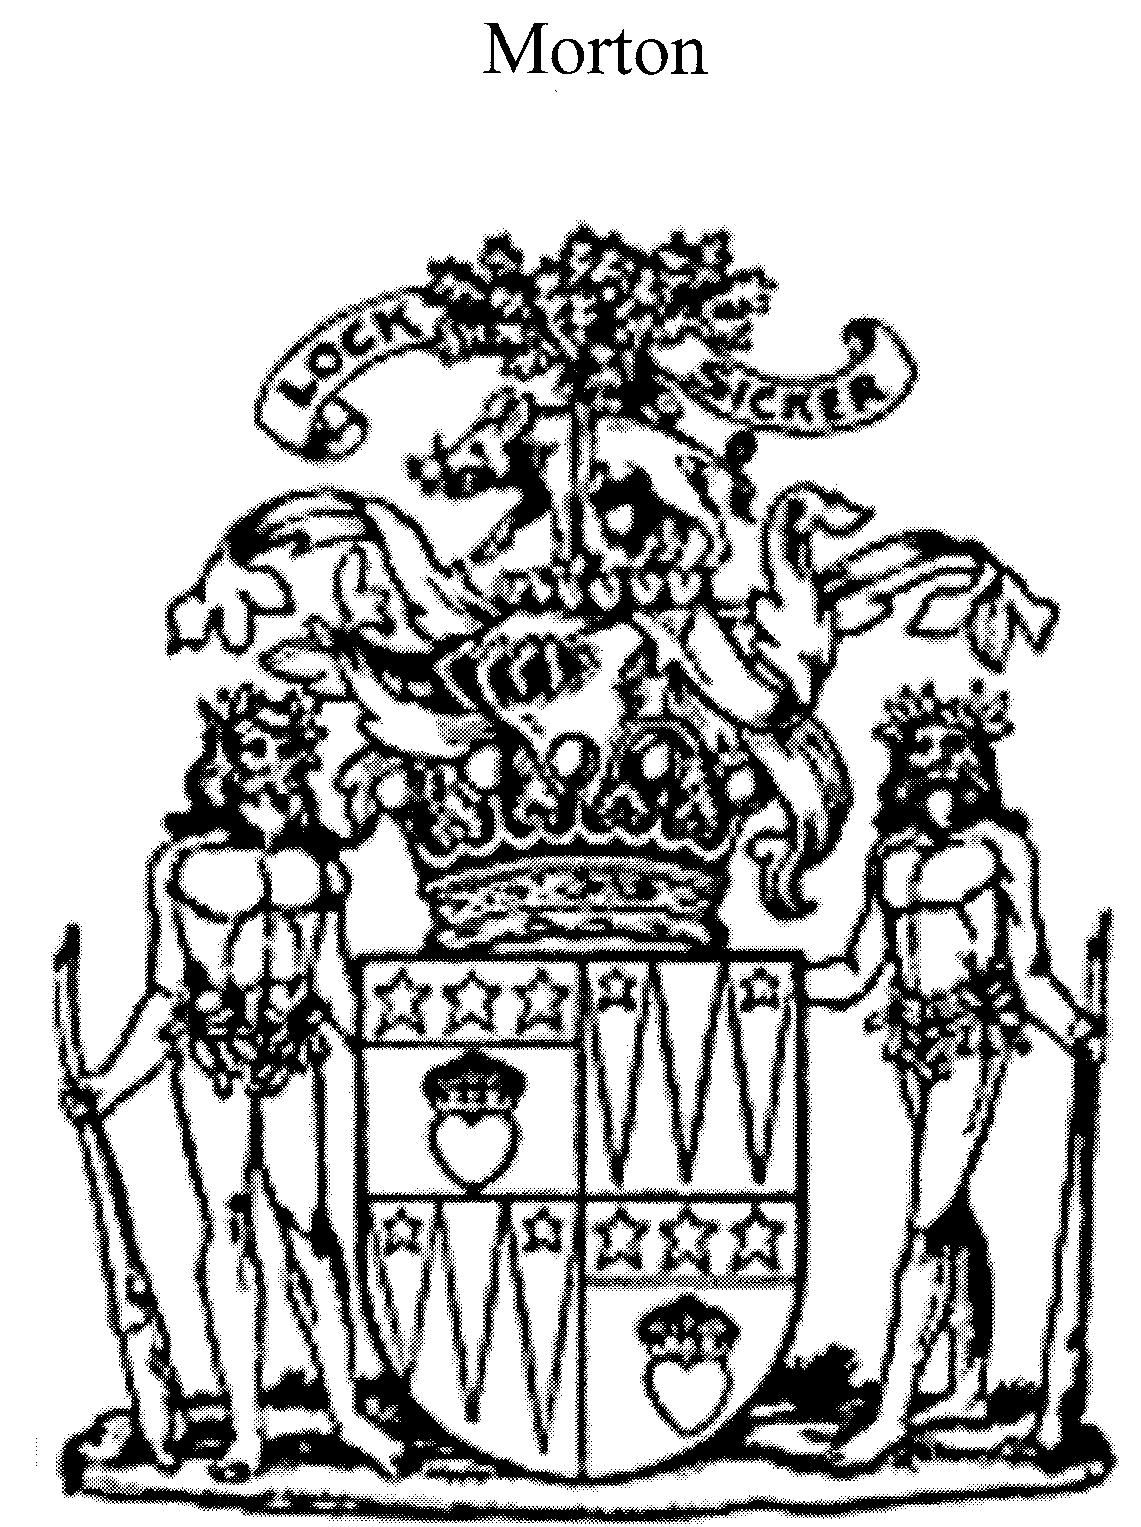 Morton coat of arms